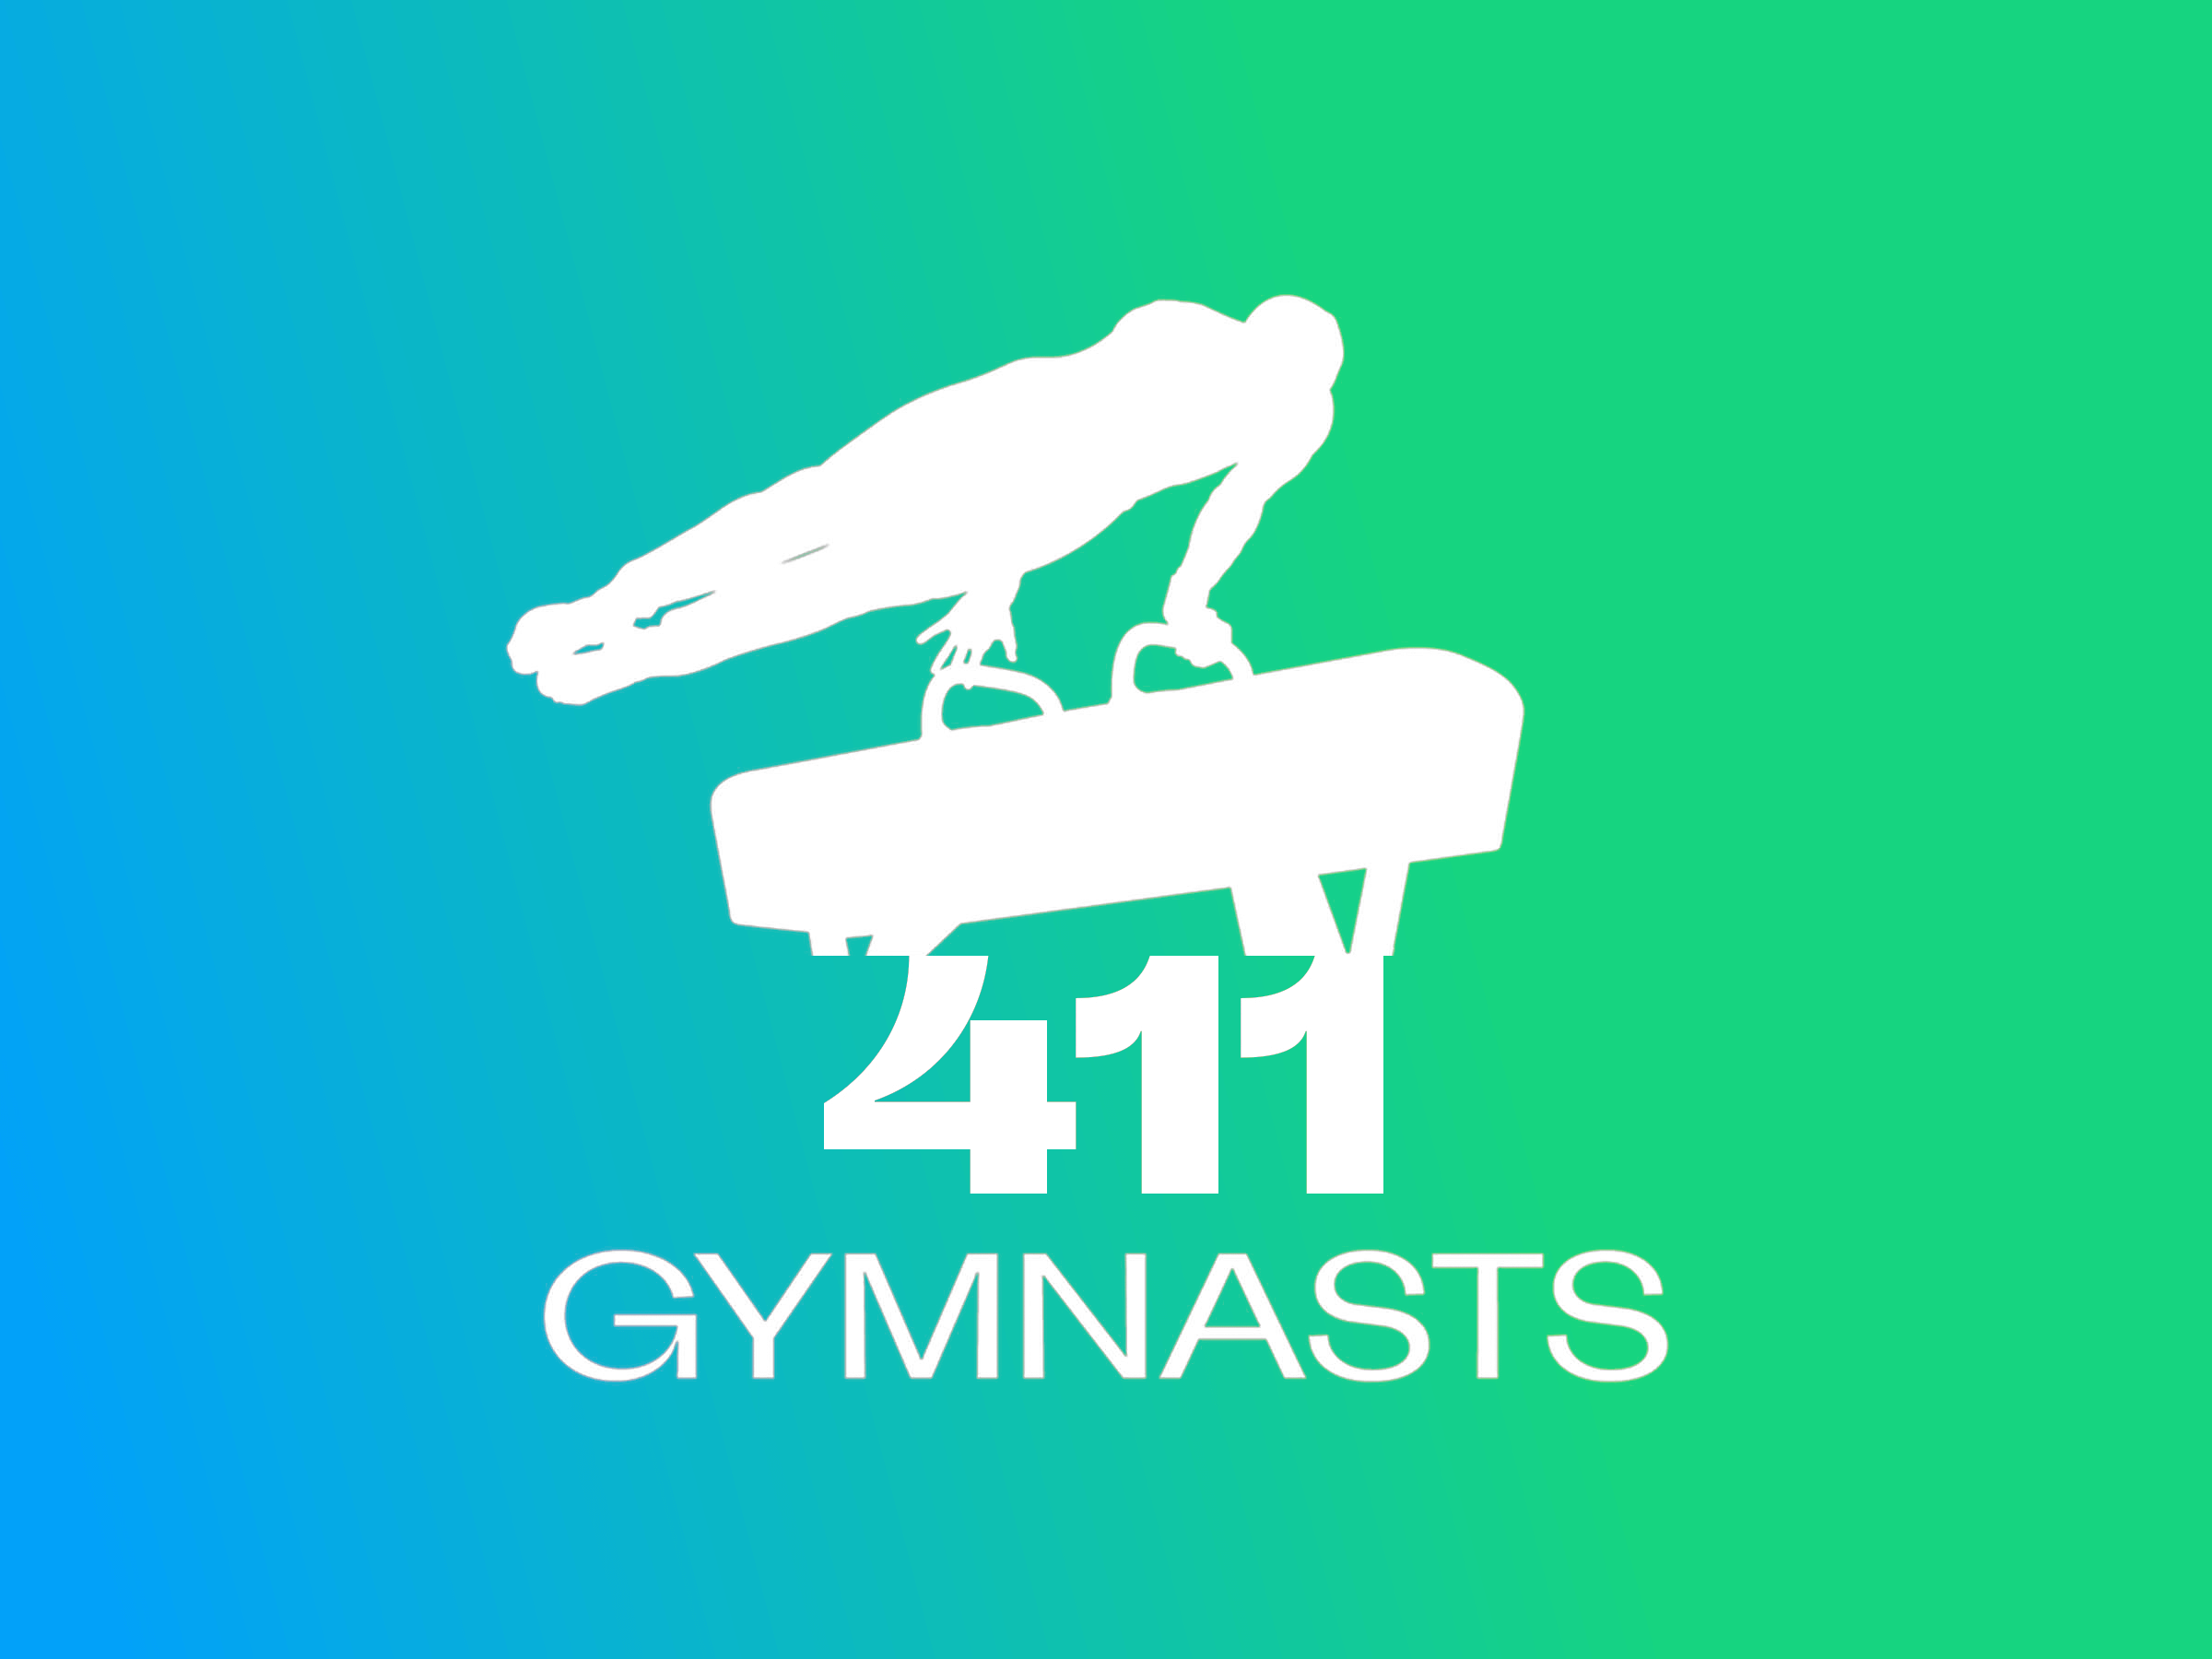 411 gymnasts